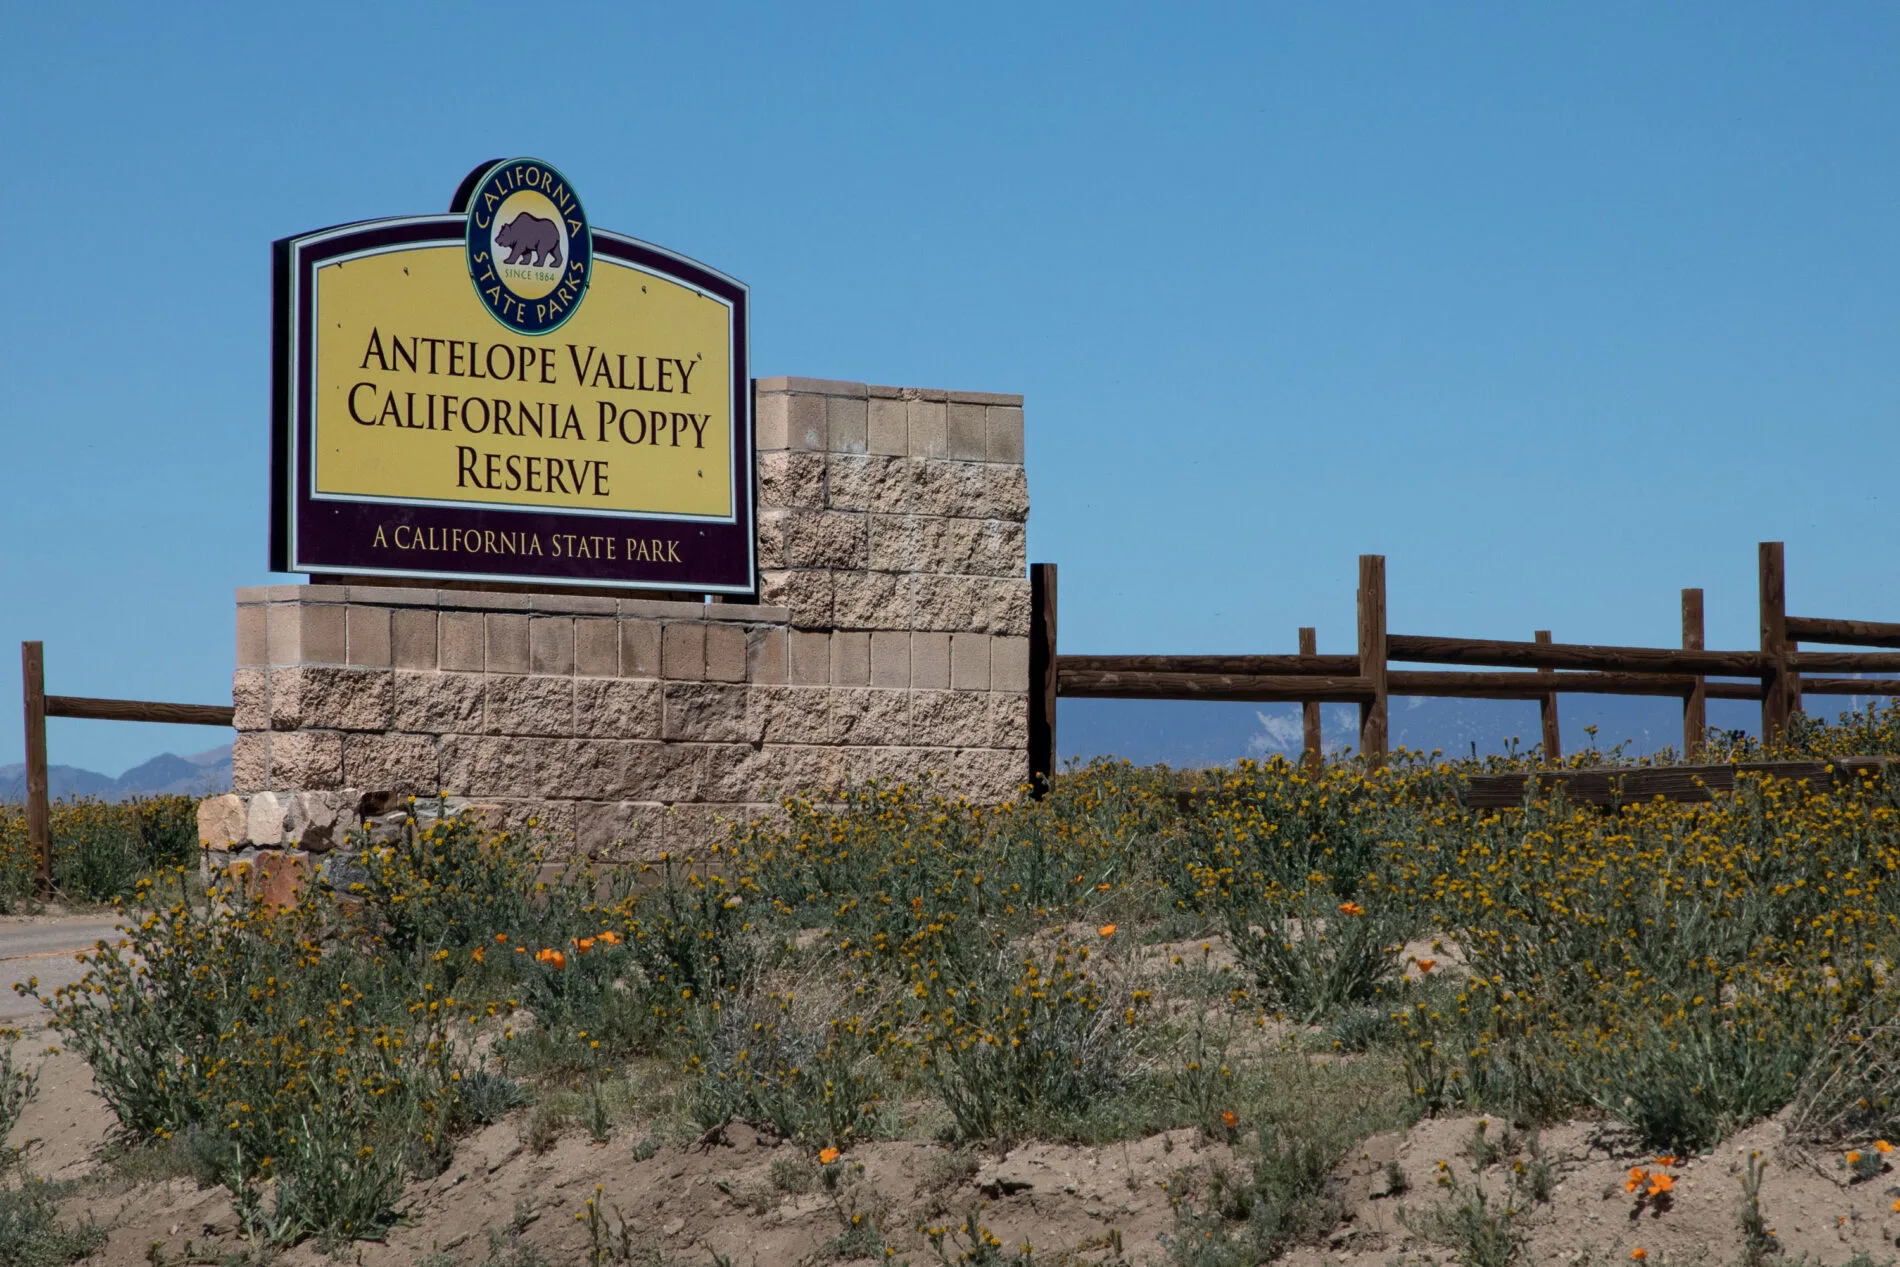 Antelope Valley California Poppy Reserve sign.